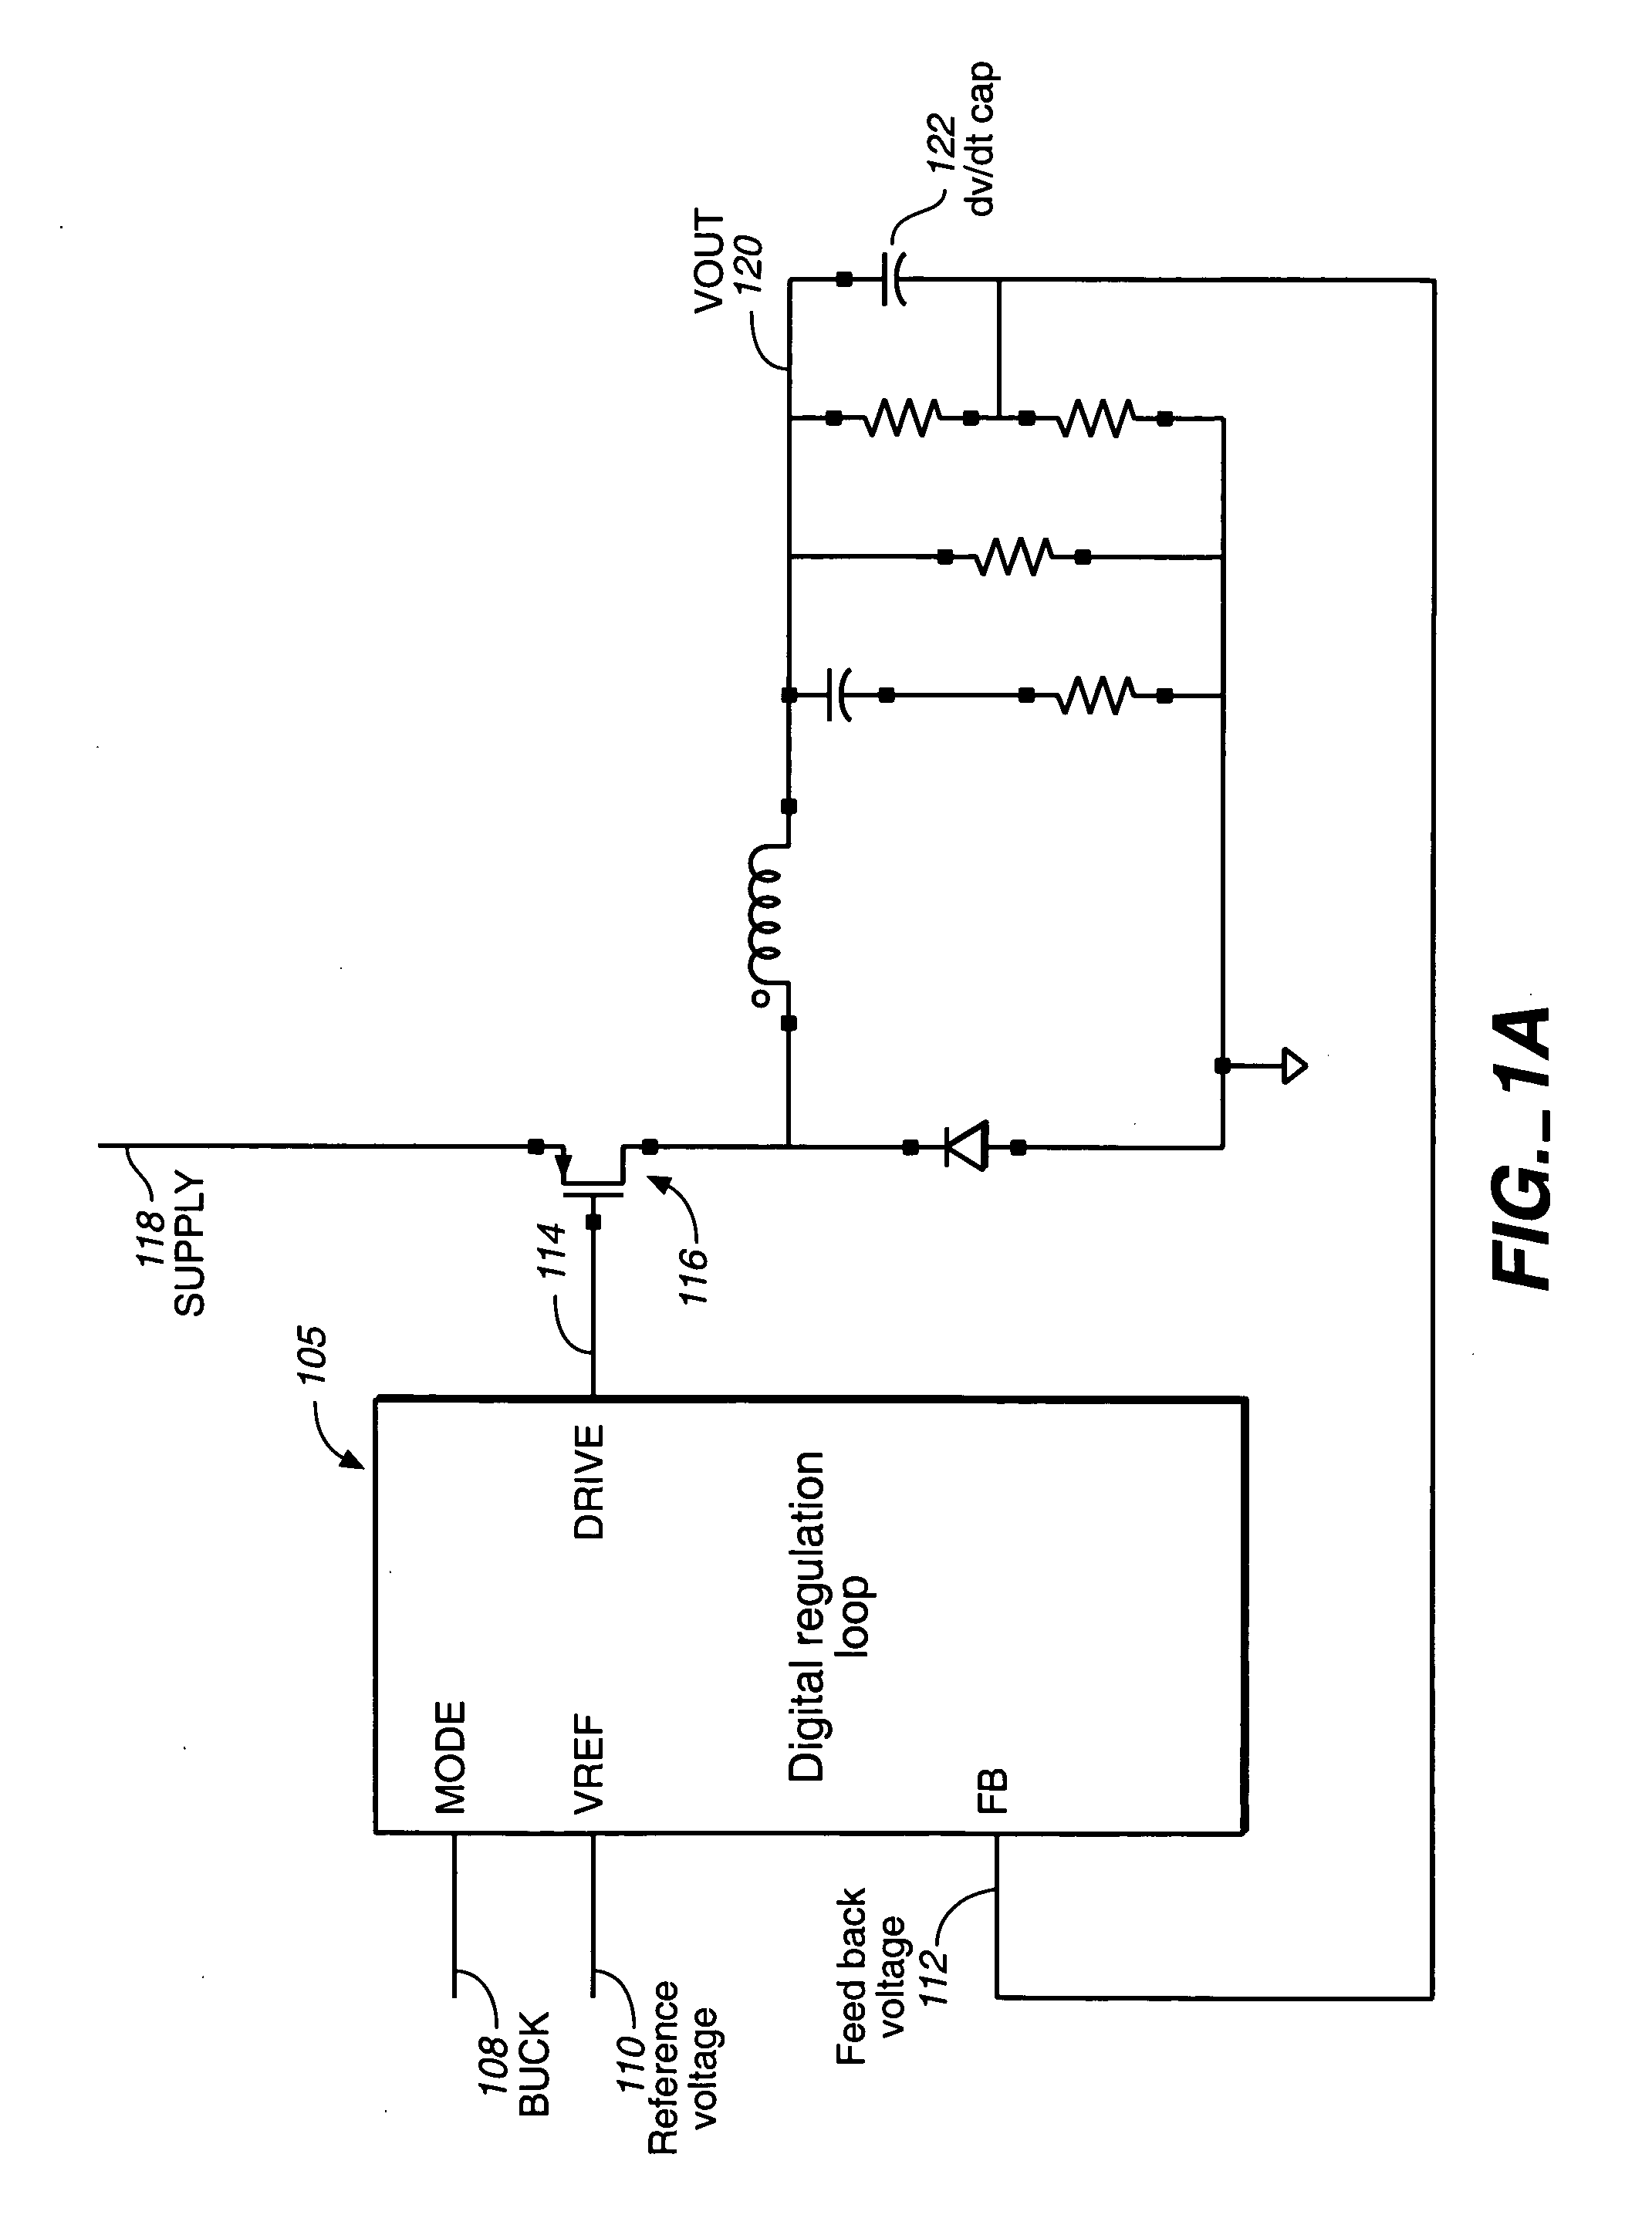 Digital control of switching voltage regulators